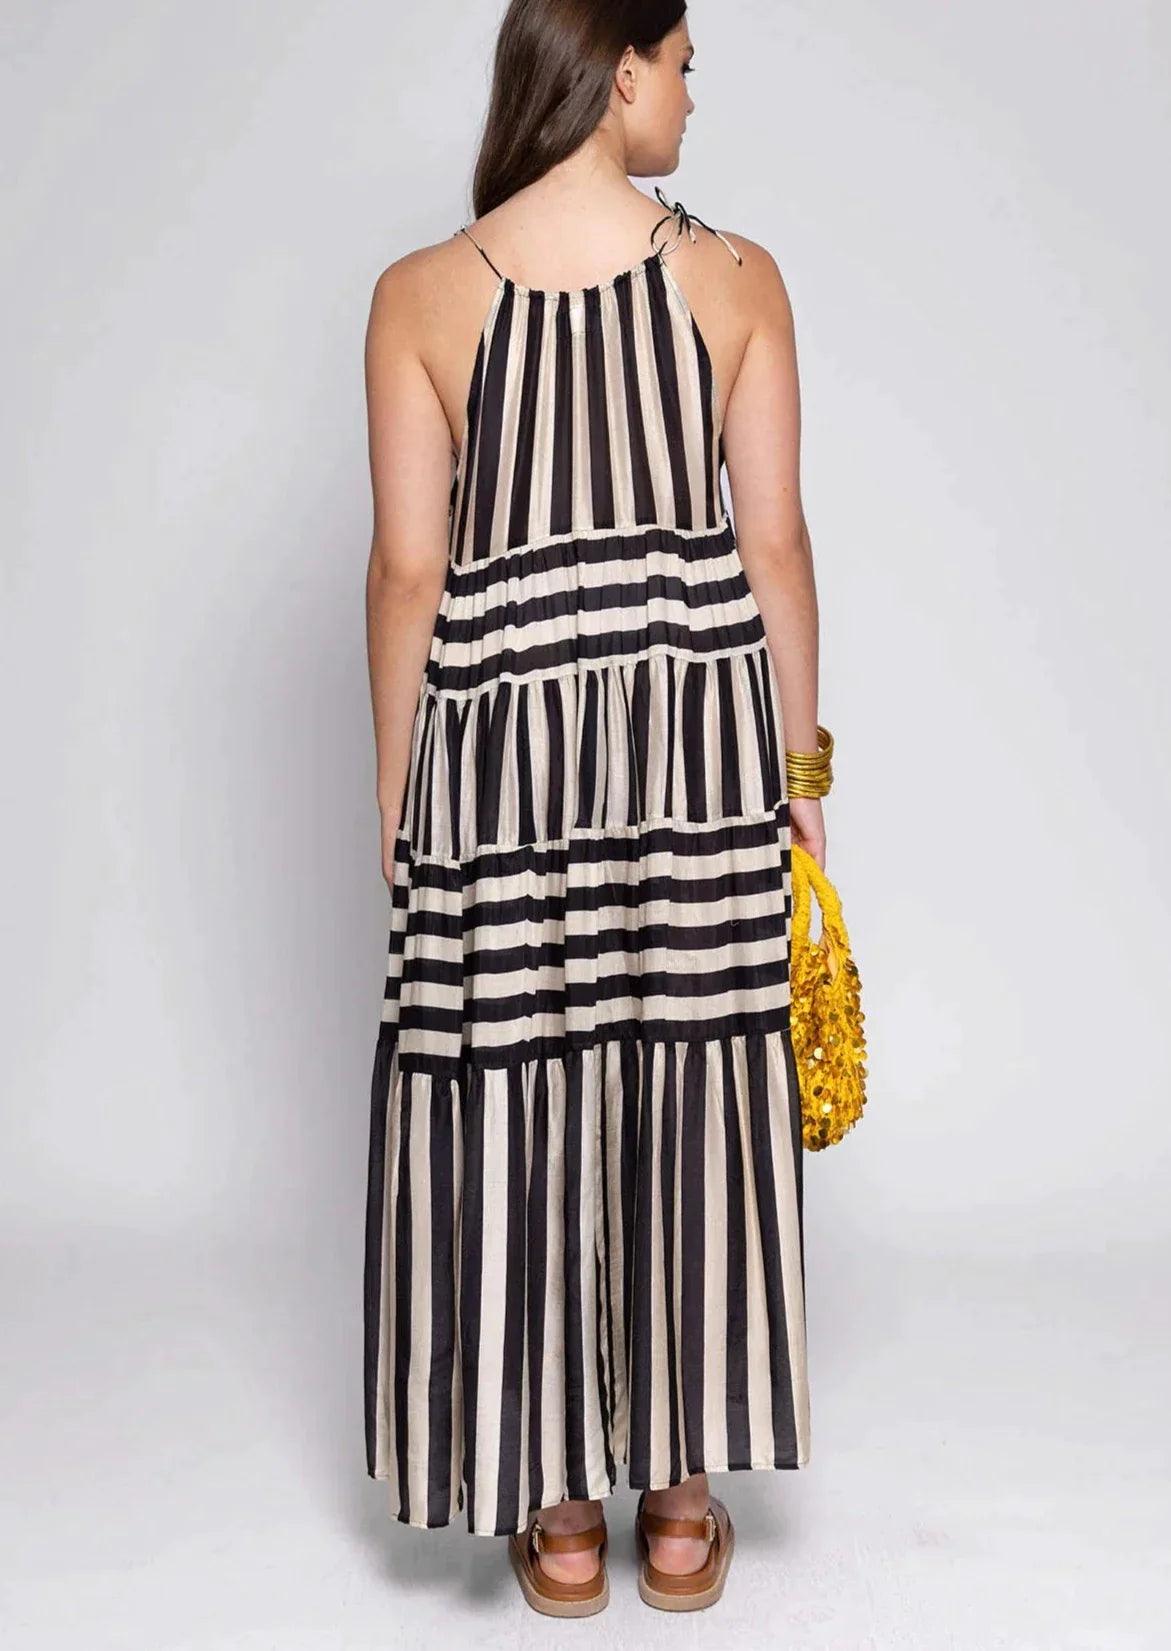 Sundress - Valeria Black and Off White Stripe Dress - OutDazl